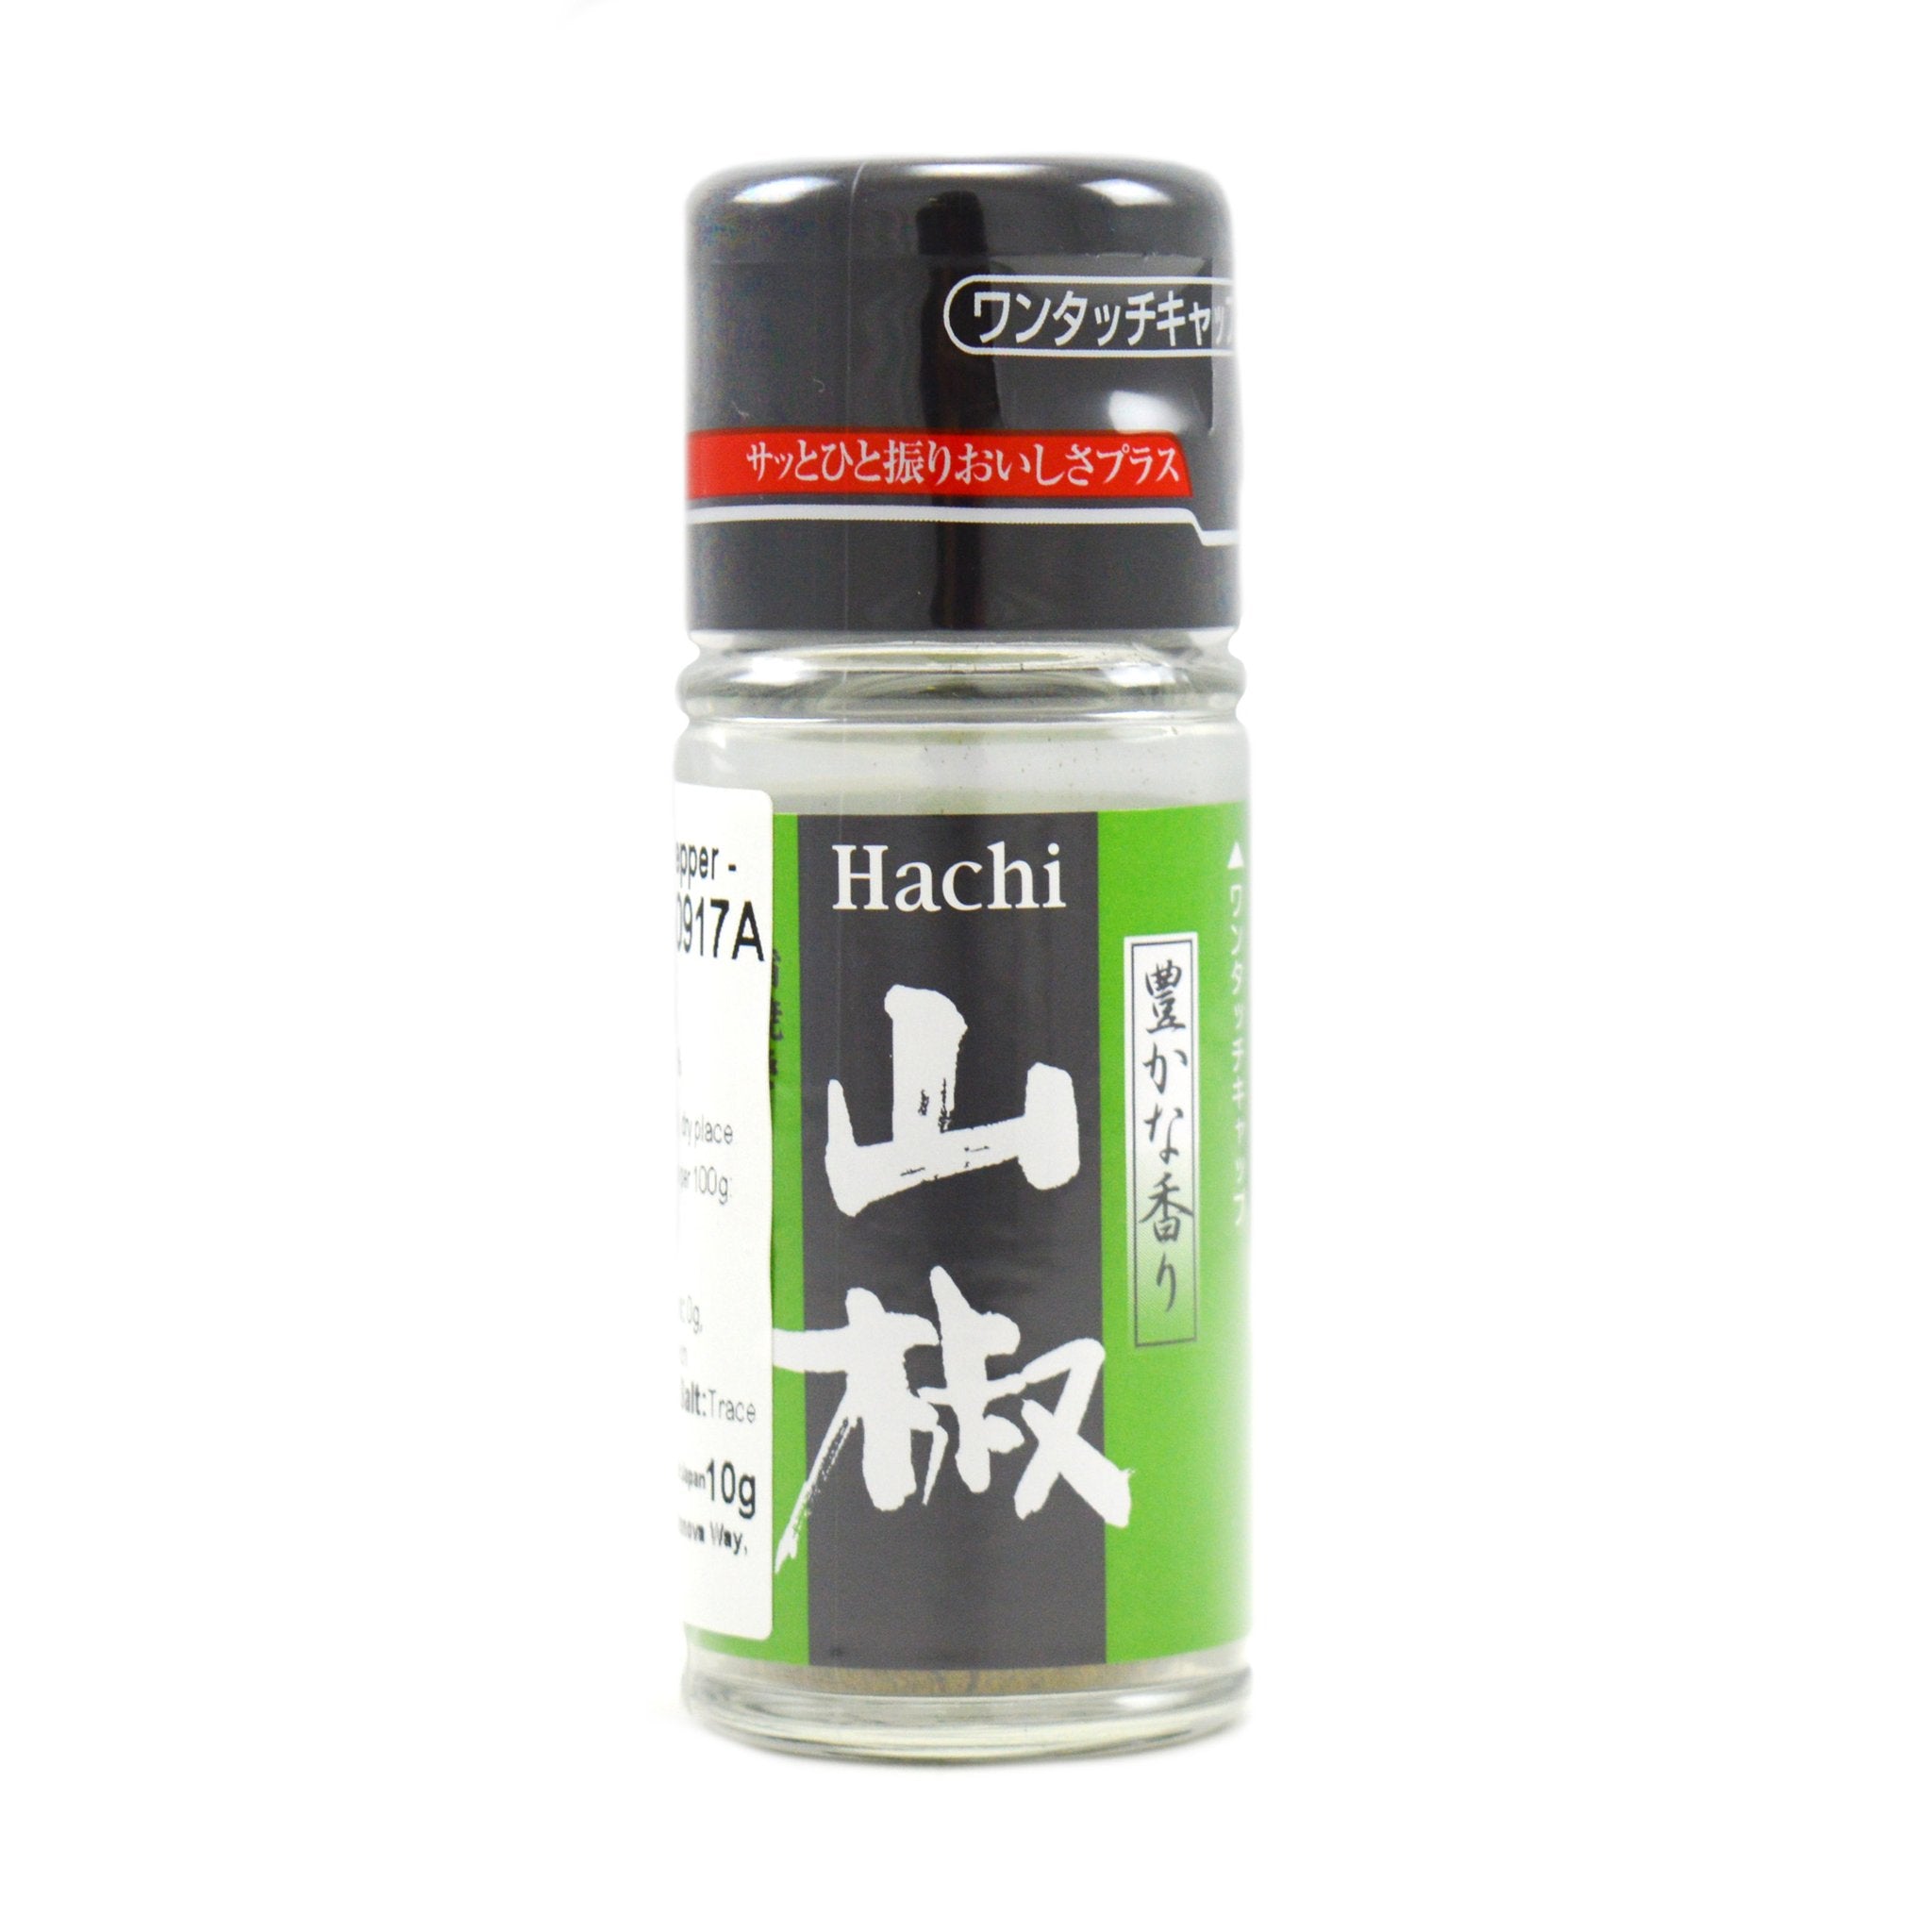 Japanese Pepper - Sansho 10g by Hachi